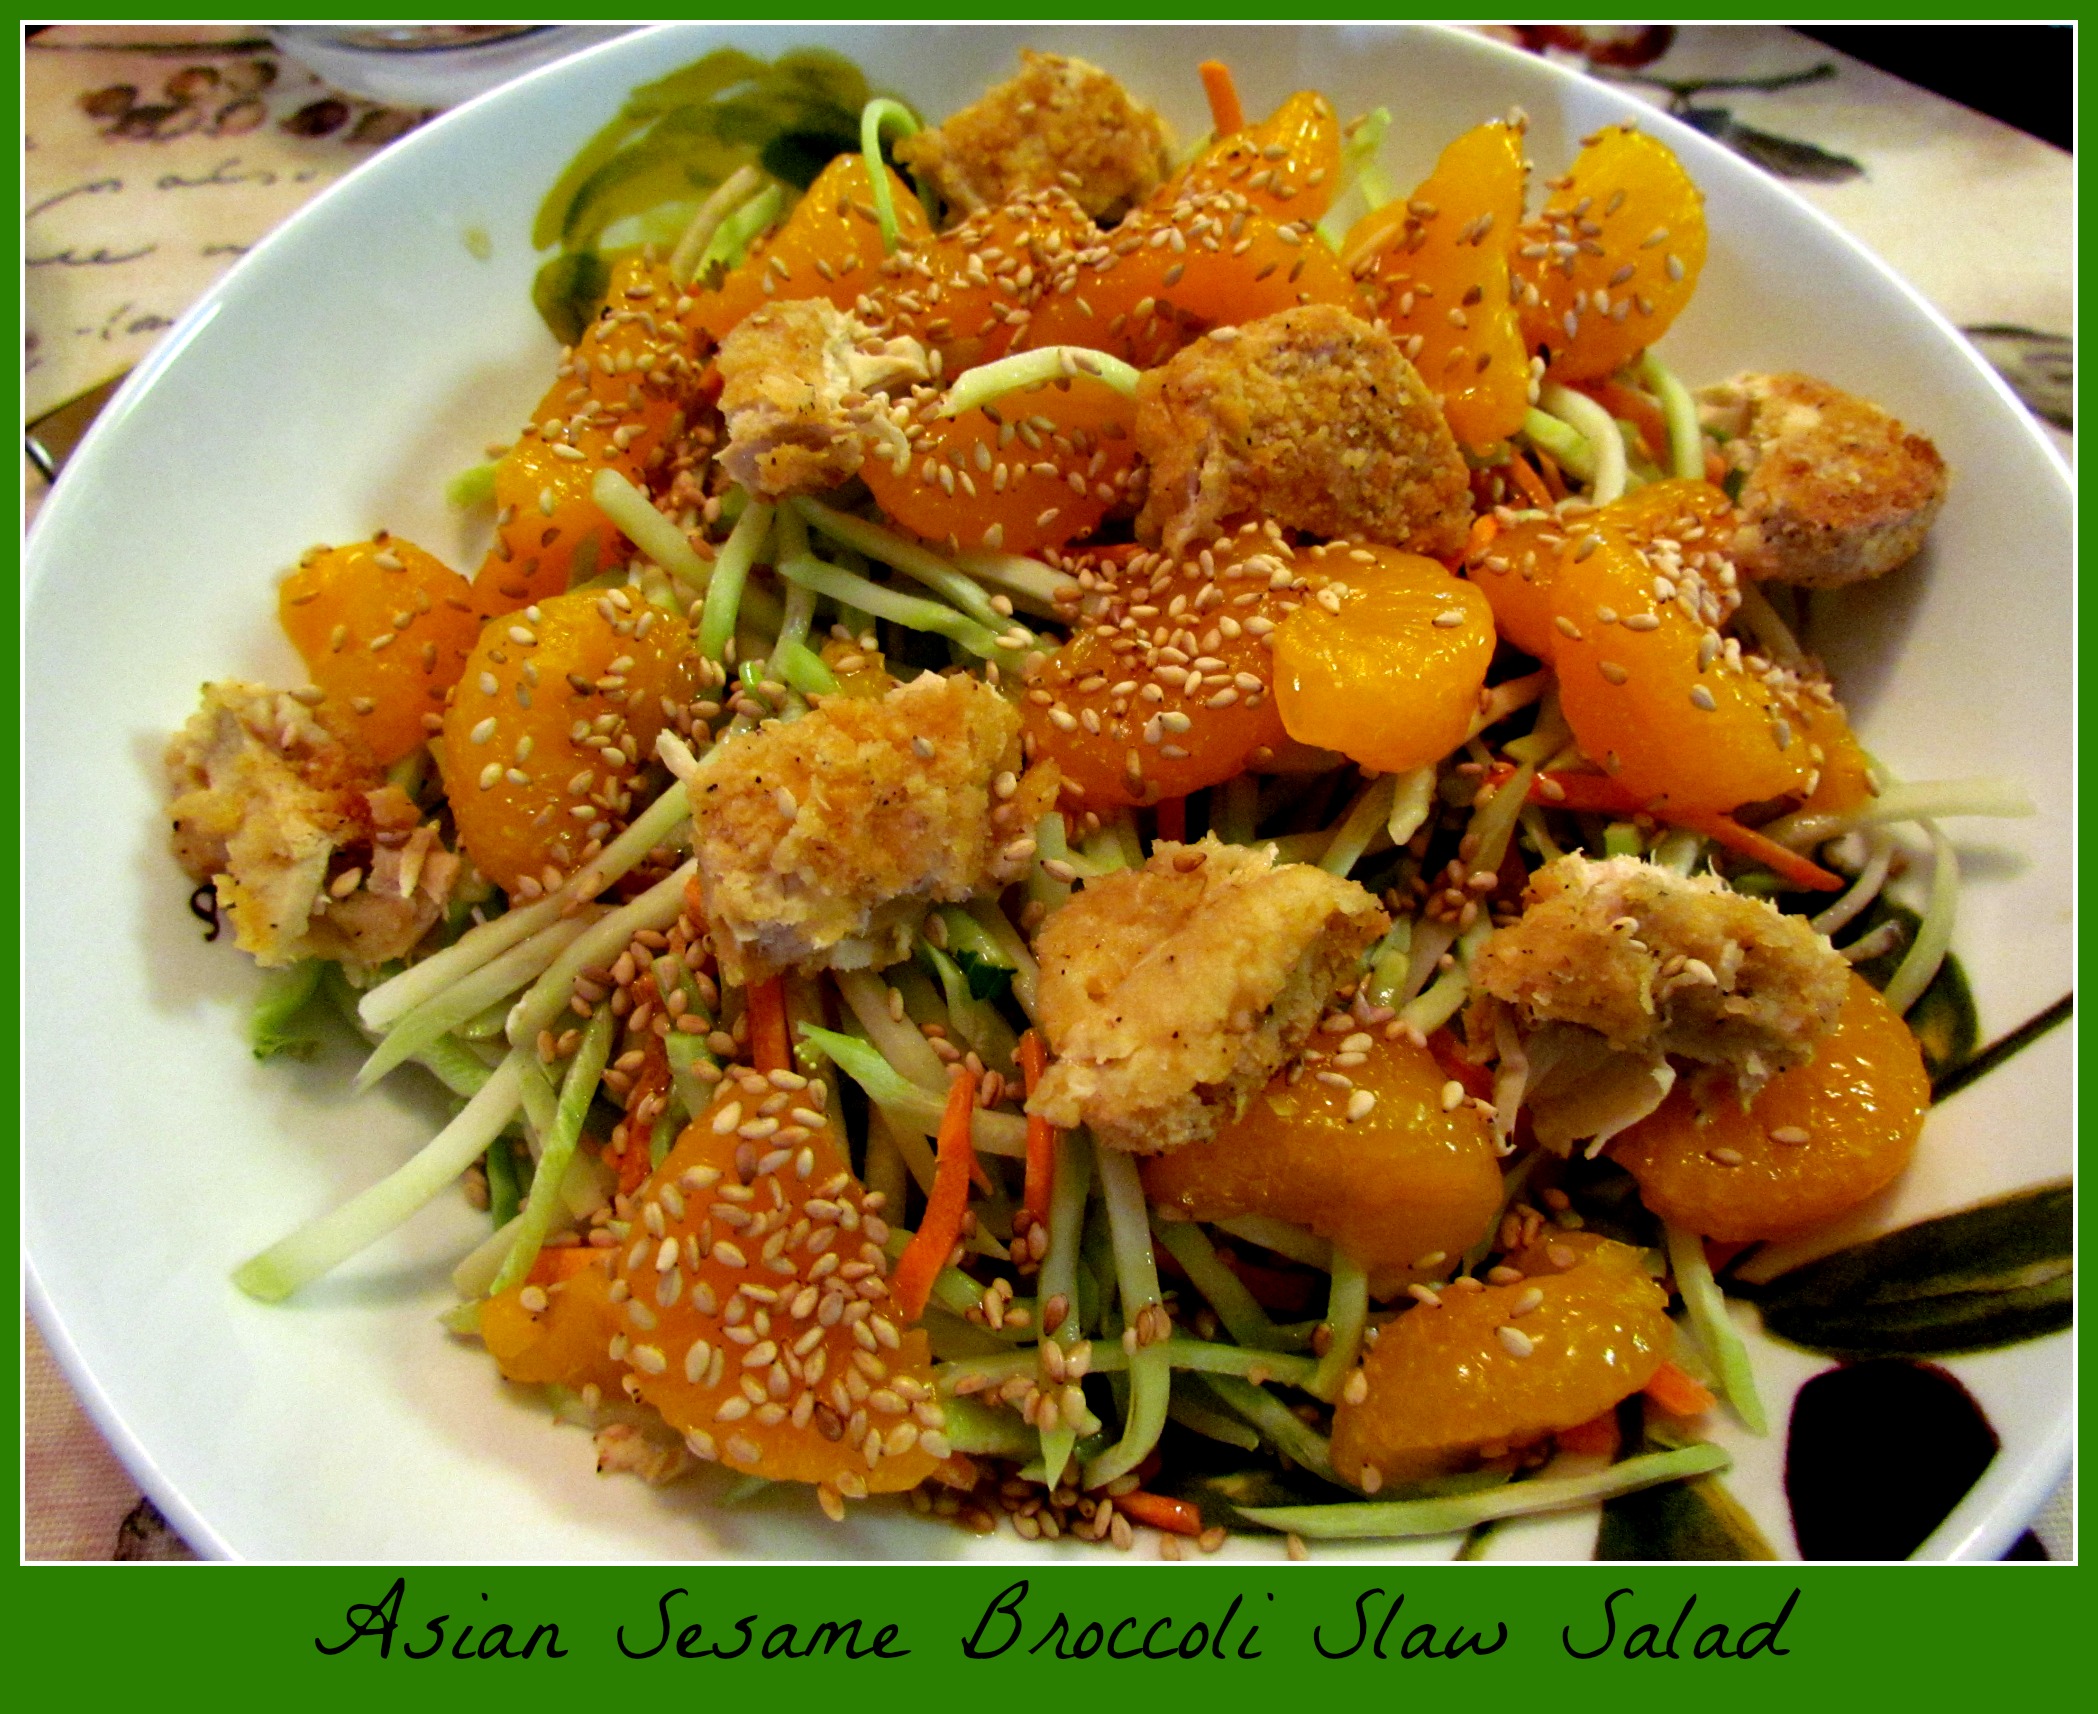 Asian Sesame Broccoli Slaw Salad